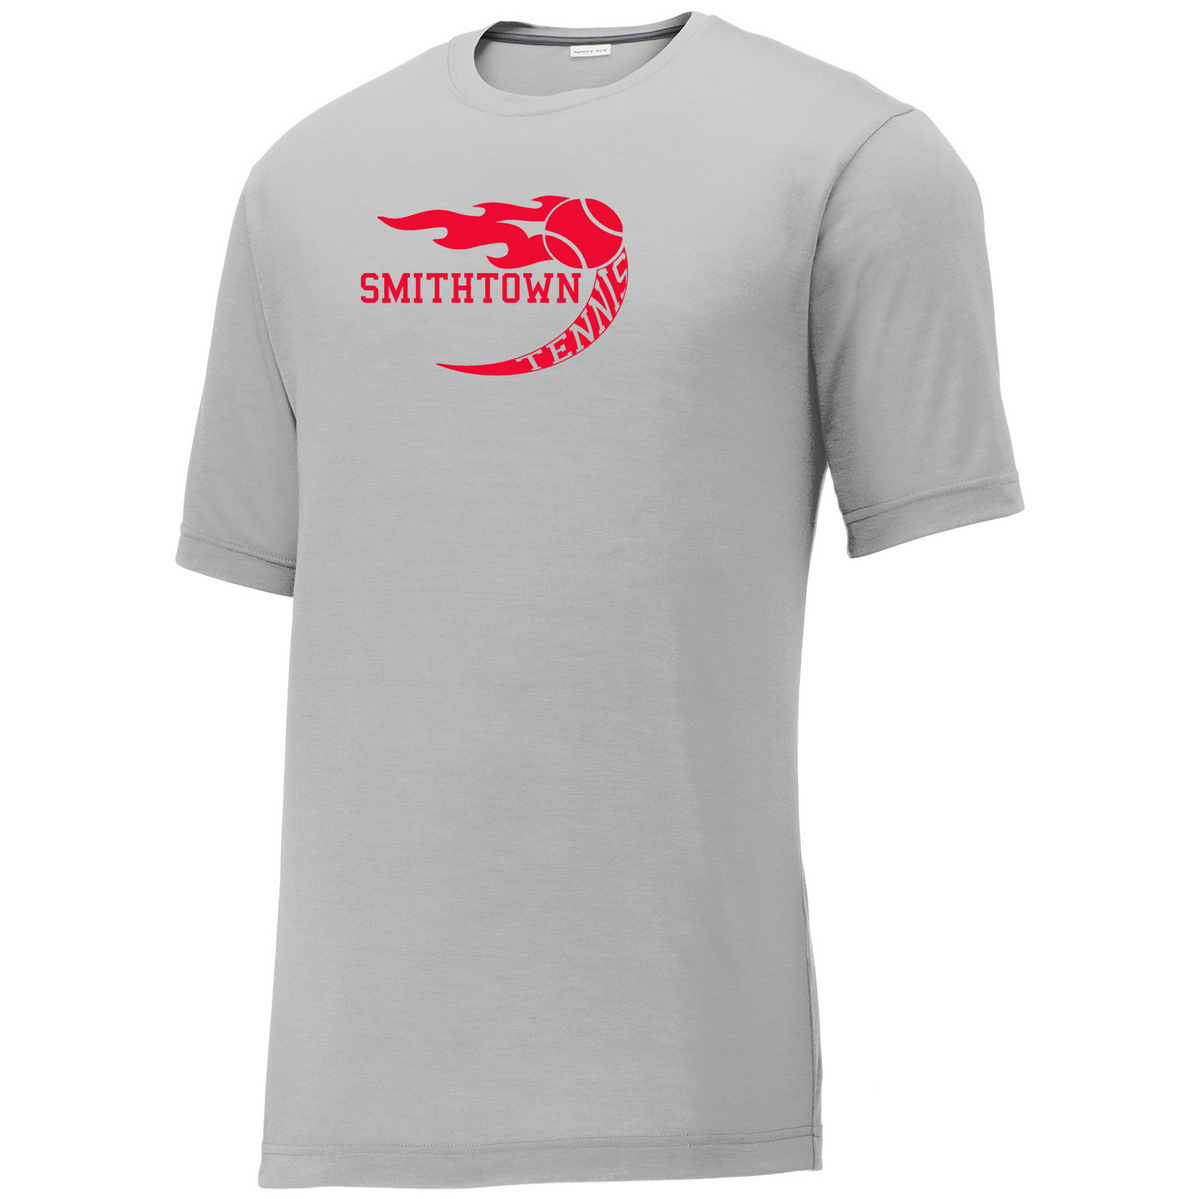 Smithtown Tennis CottonTouch Performance T-Shirt